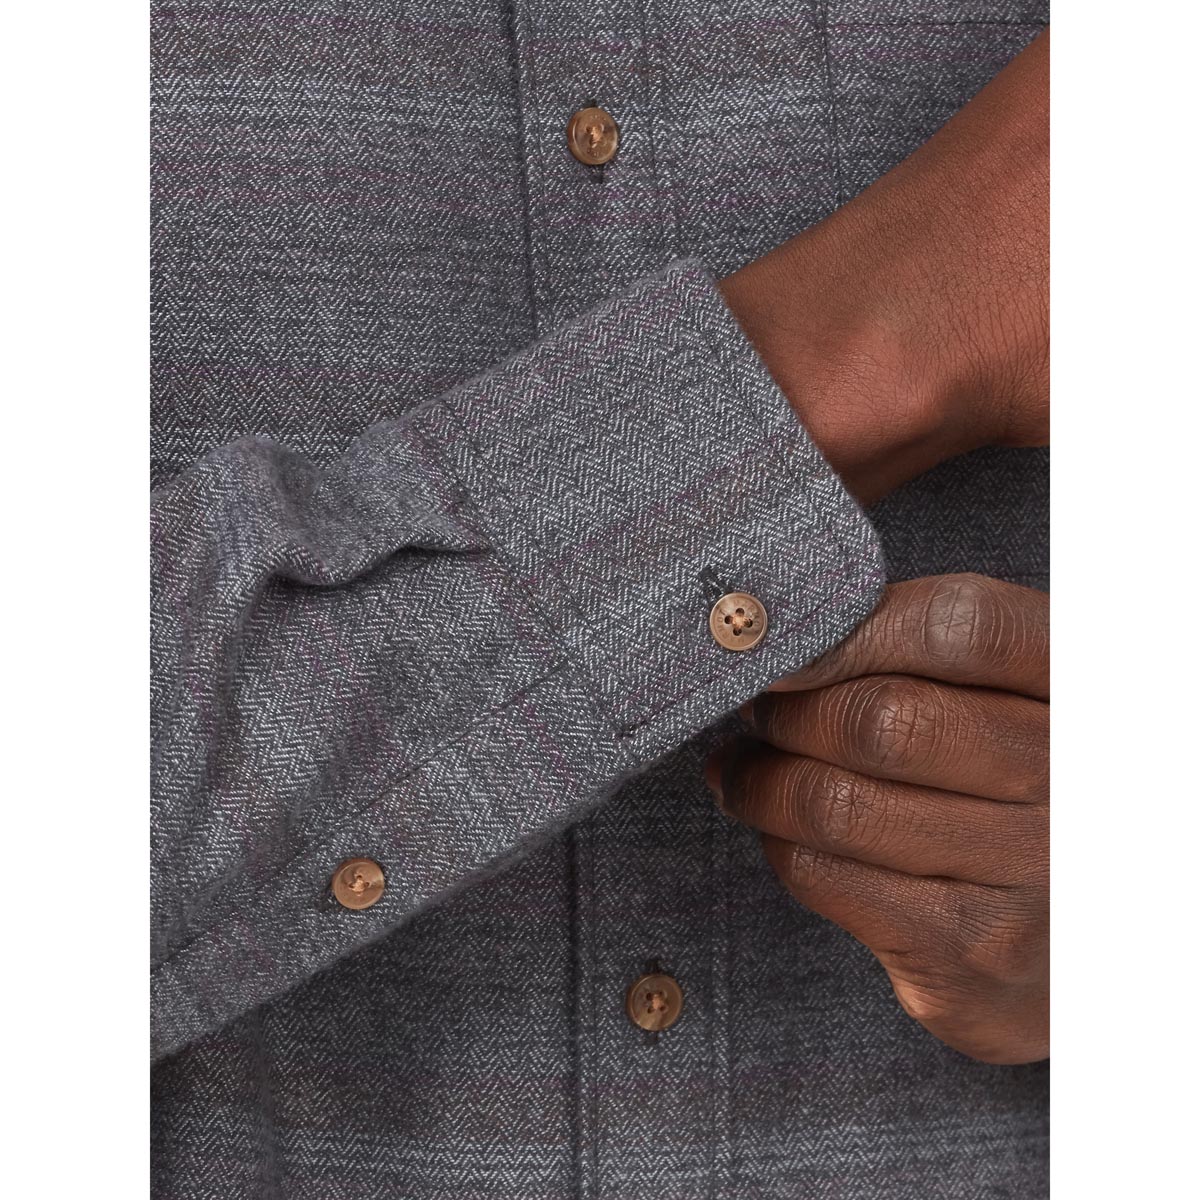 Marmot Men's Fairfax Novelty Heathered Lightweight Flannel Long Sleeve